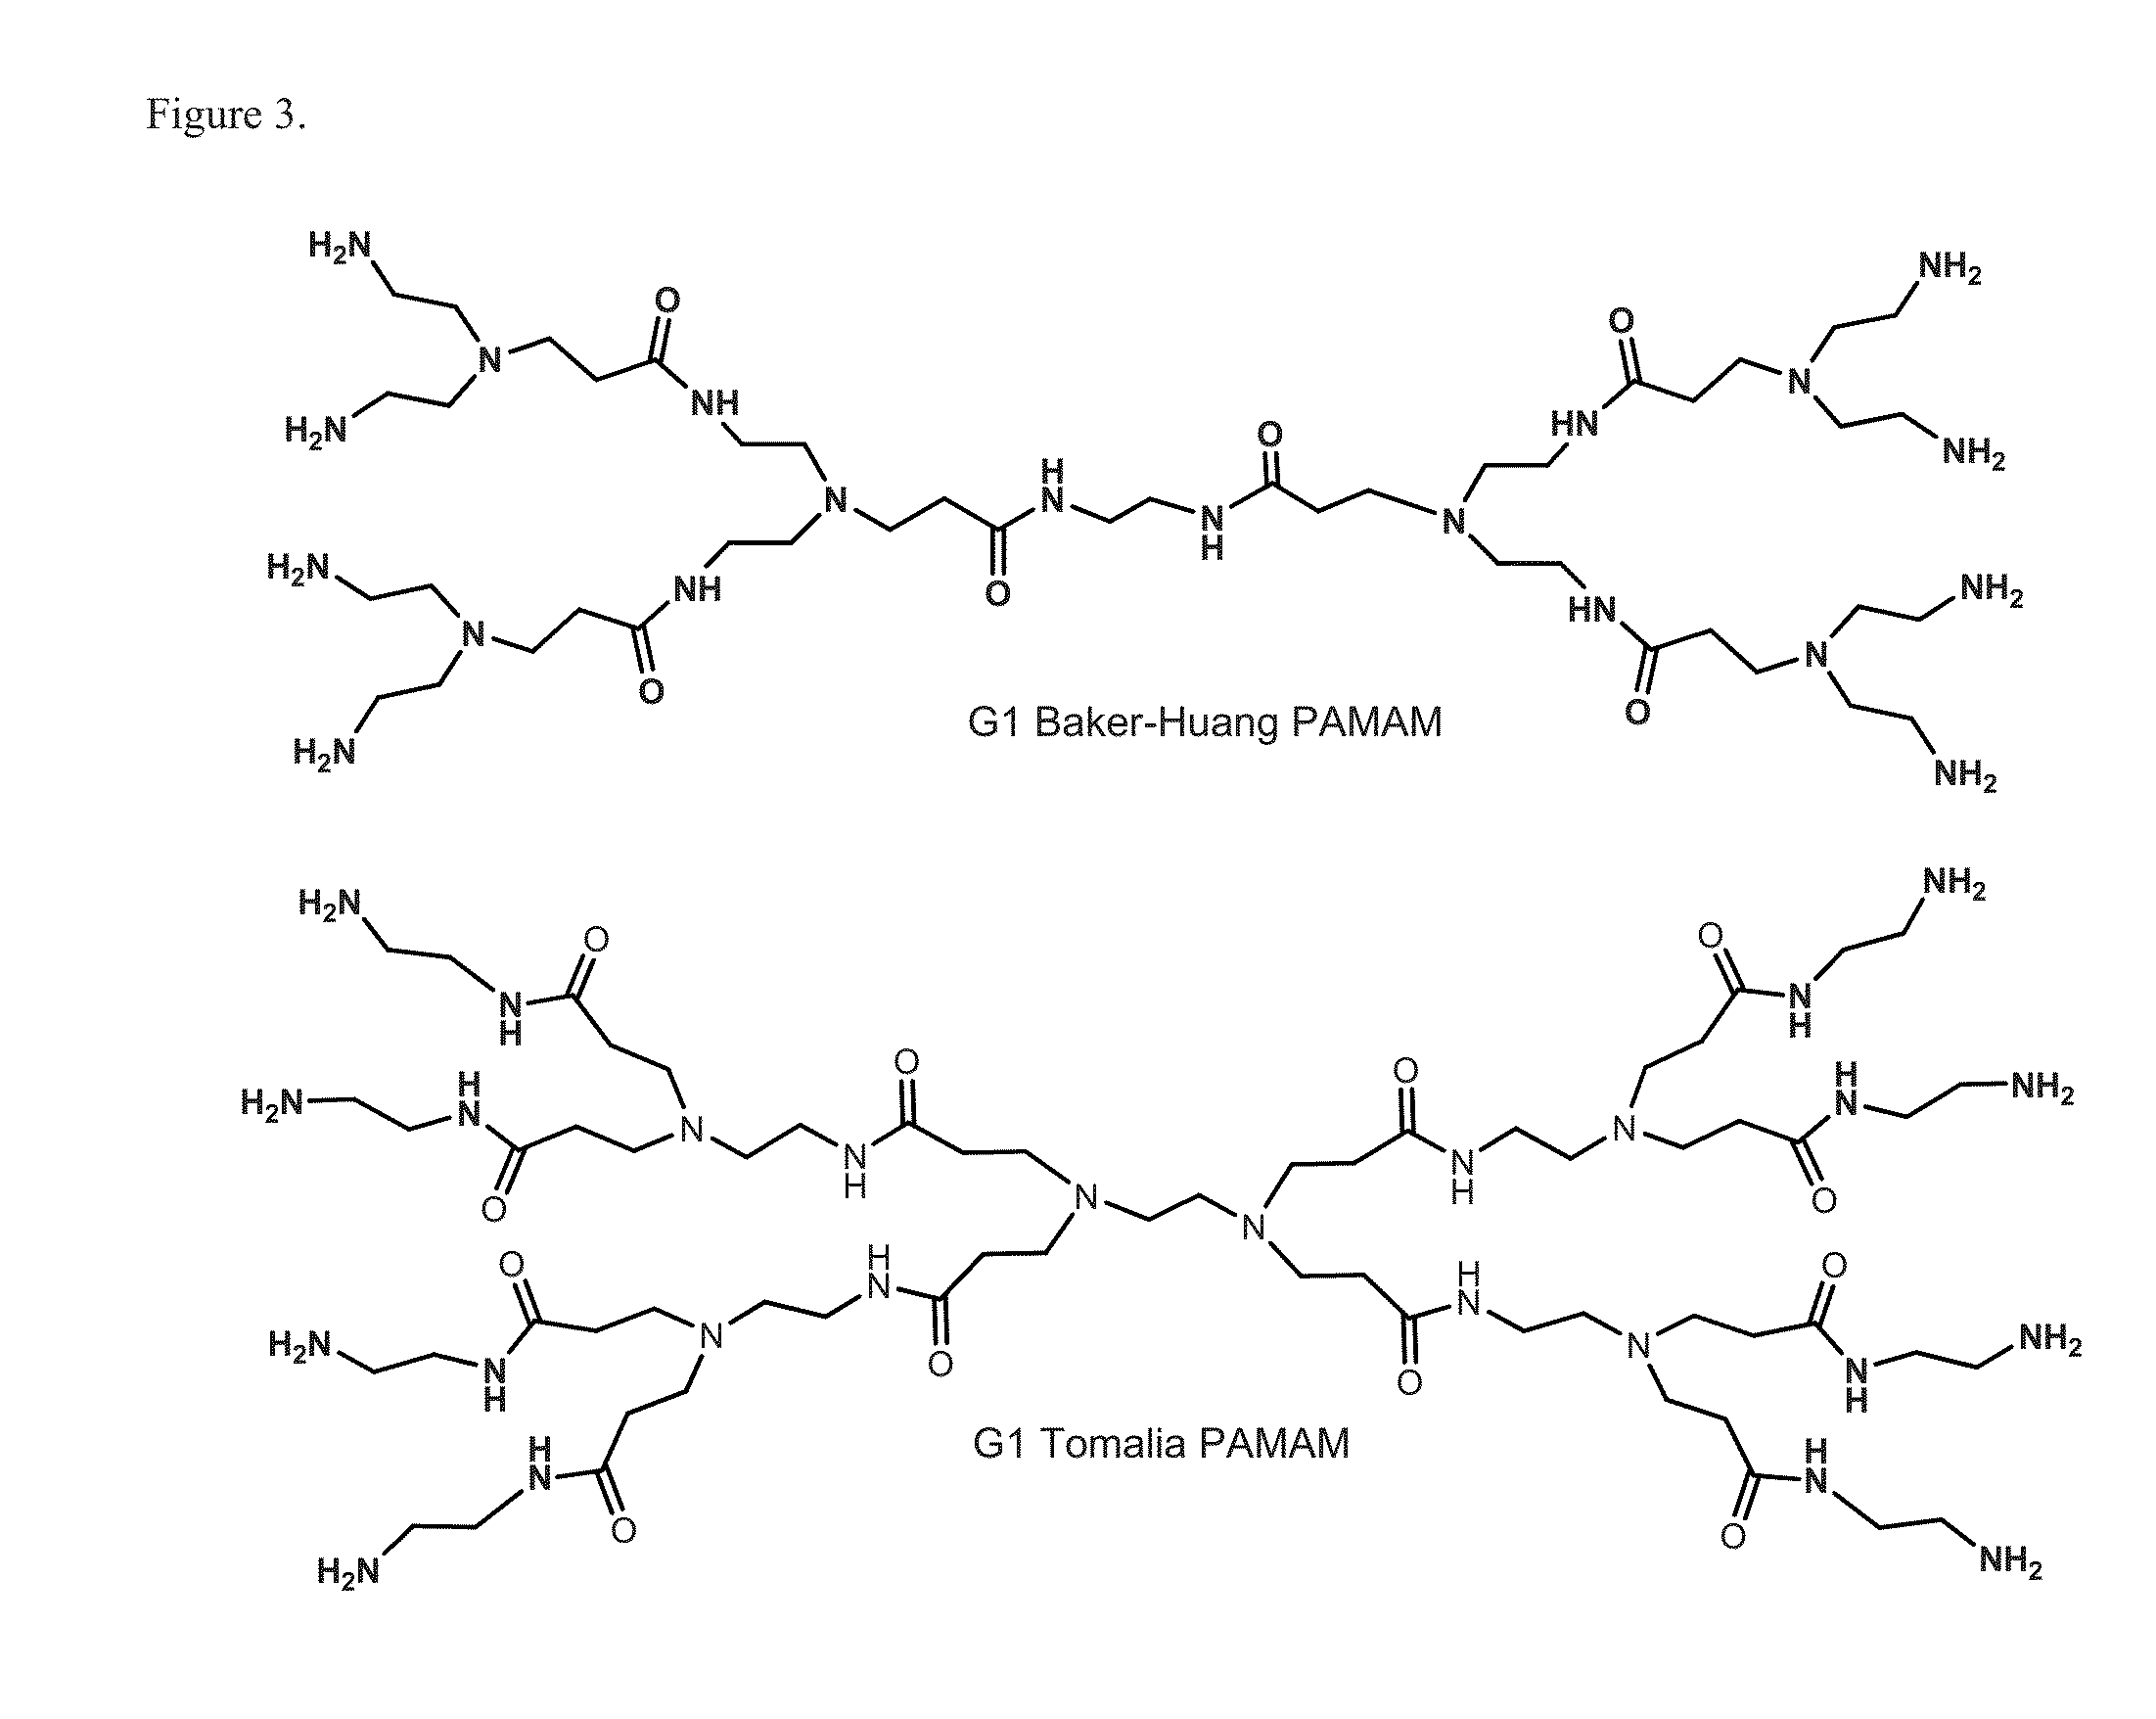 Multifunctional small molecules